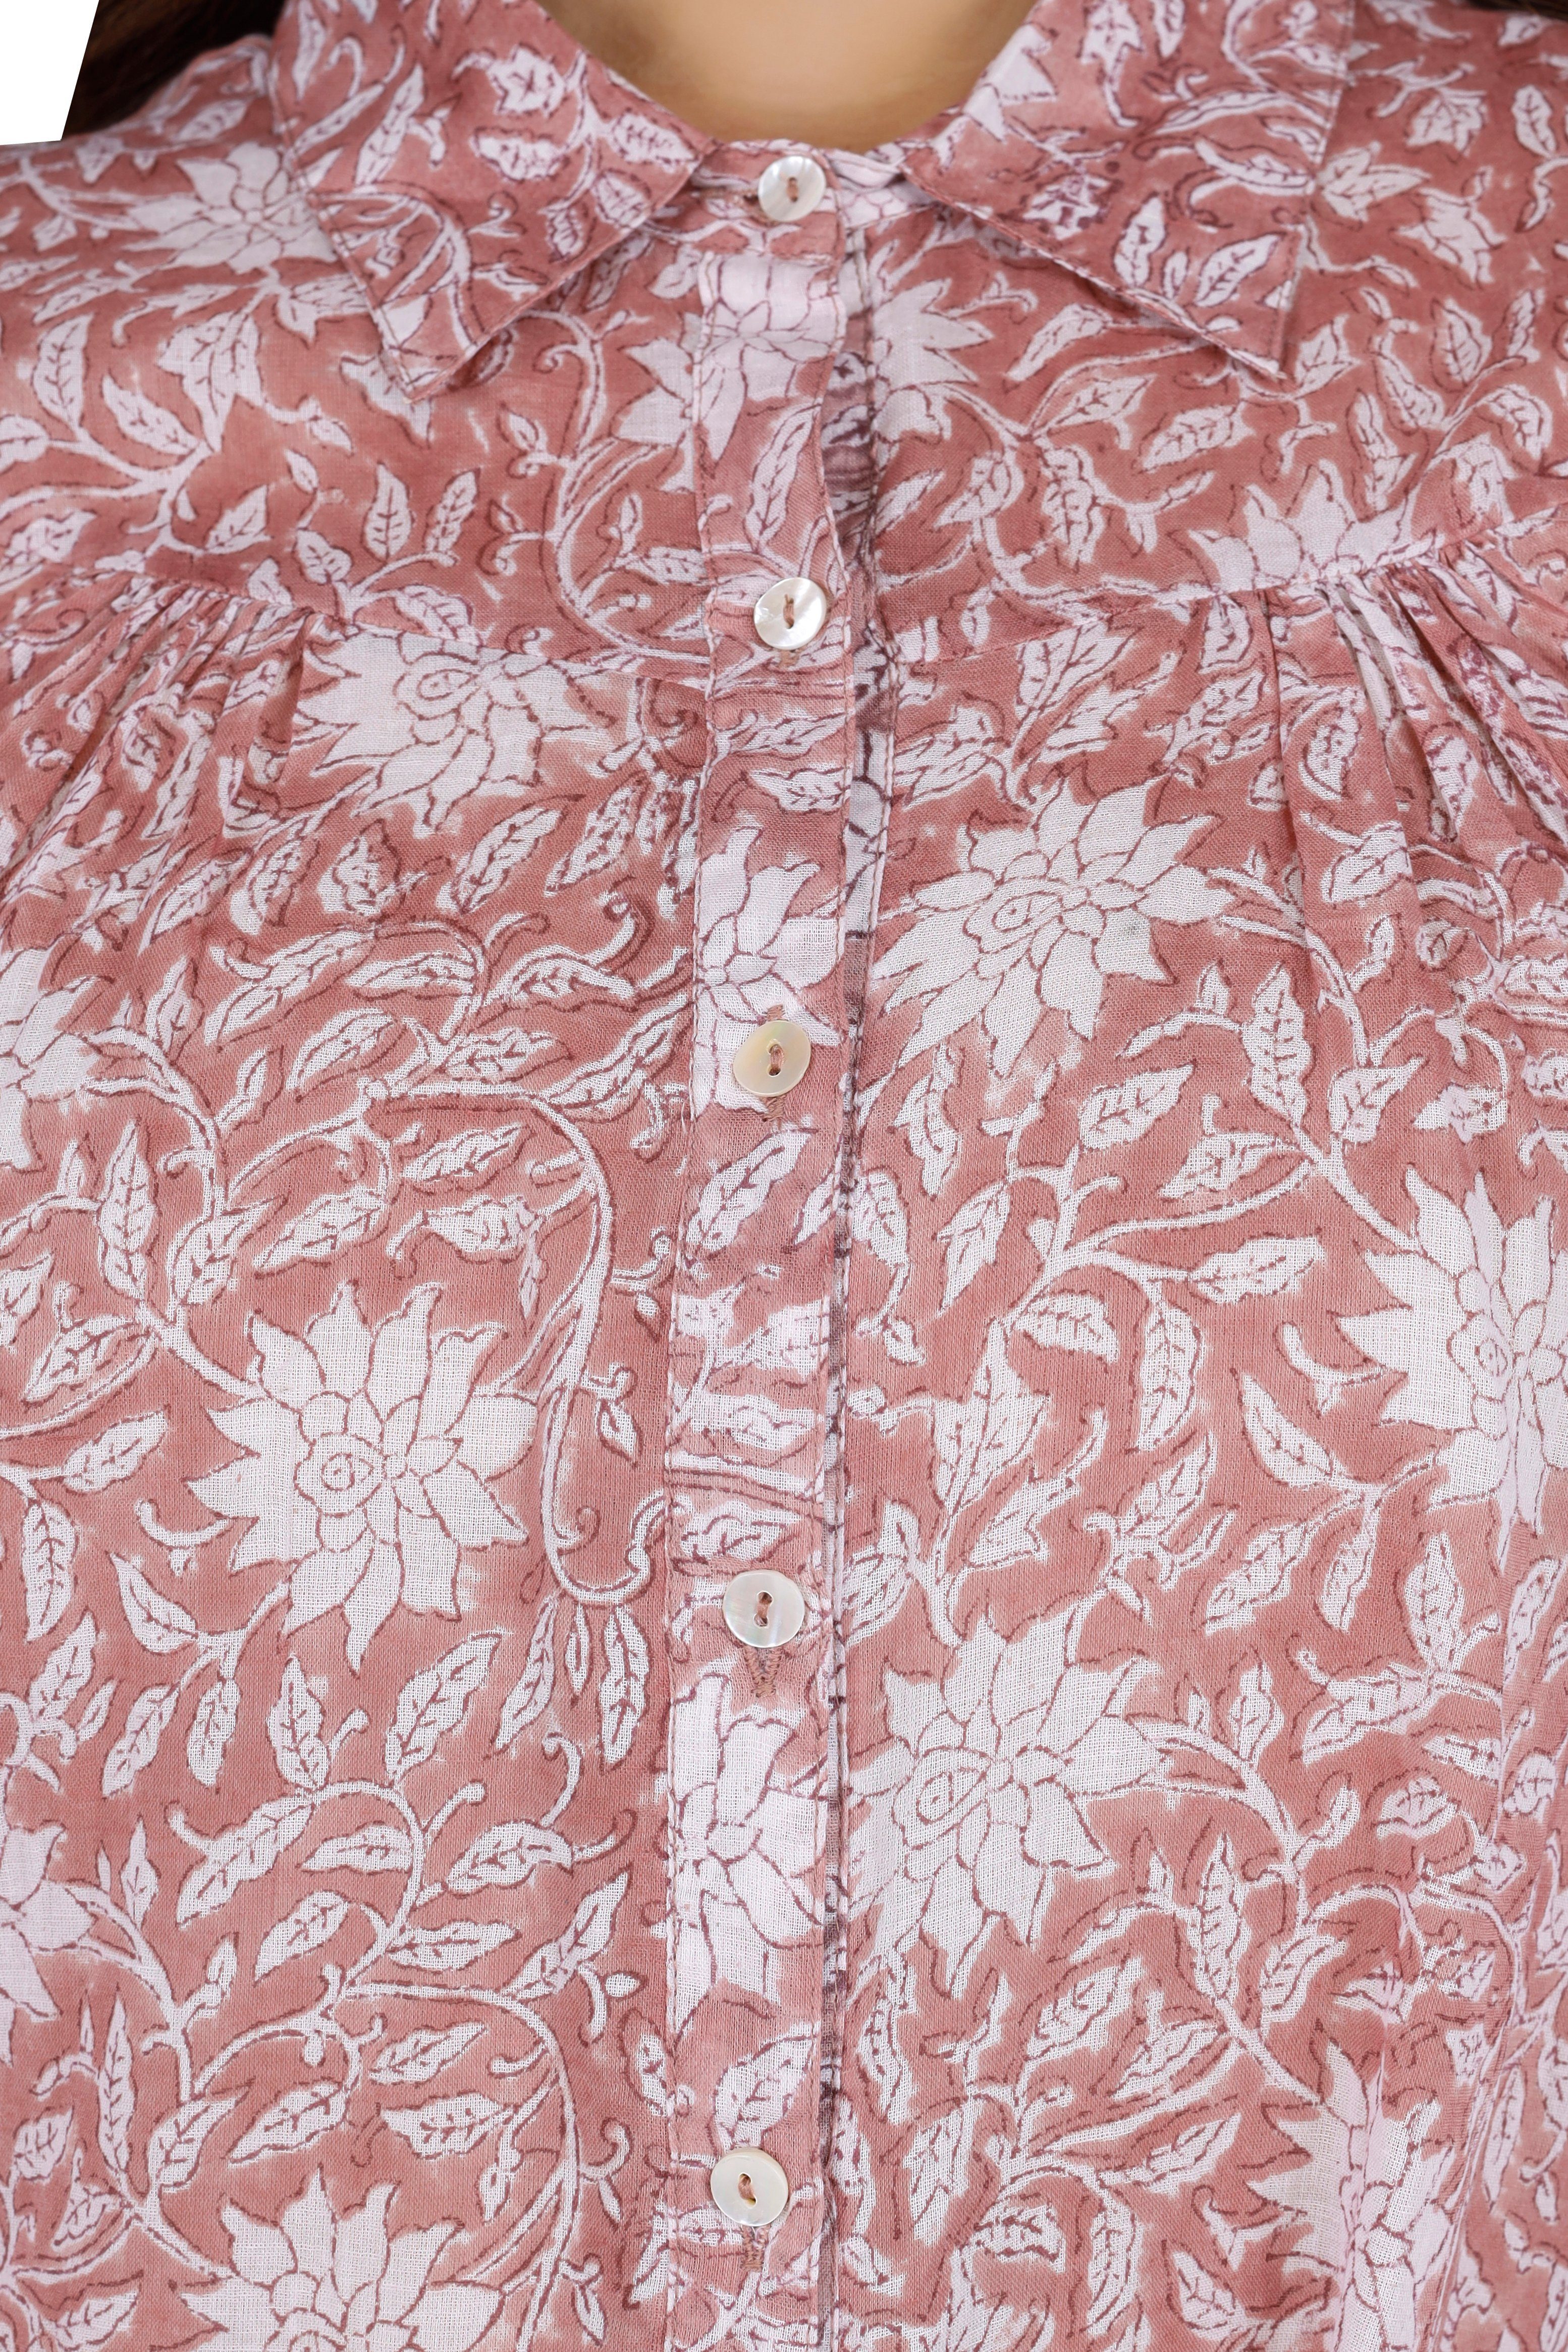 Guru-Shop Longbluse alternative luftige Handbedruckte rosa Bekleidung Baumwollbluse.. Bohobluse